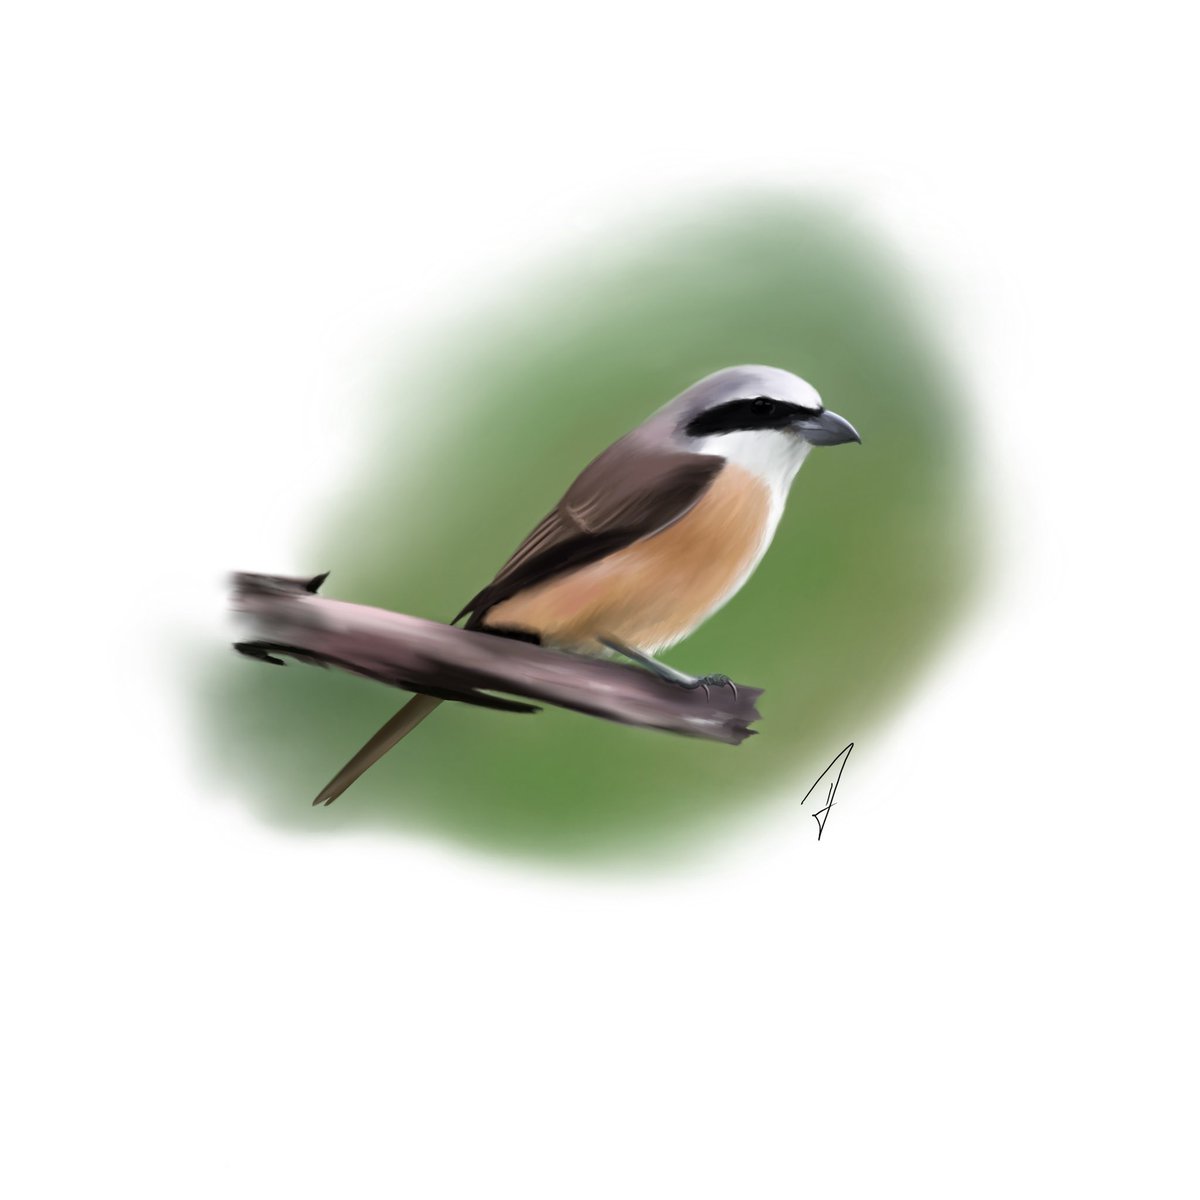 Brown Shrike / Braunwürger for / für @BirdWhisperers 🦉🪶 #birdwhispererproject #birdwhisperer #kleineKunstklasse #digitalart #digitaldrawing #procreate #procreateart #birds